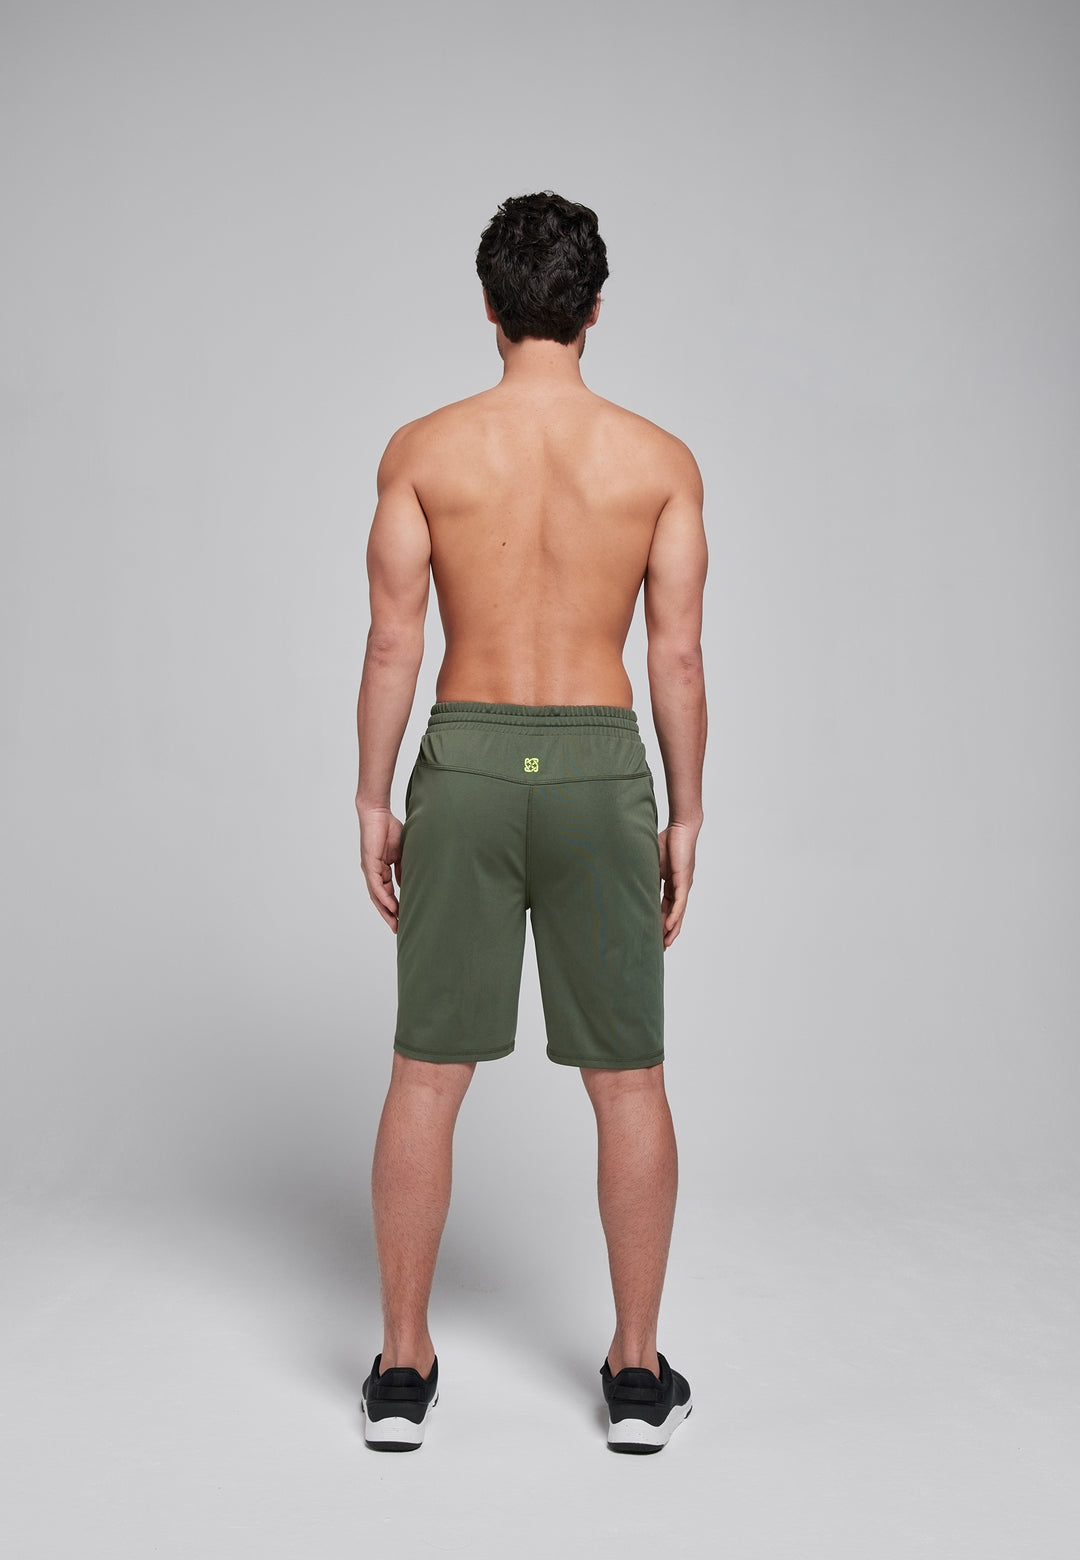 Men's sports shorts - sustainable